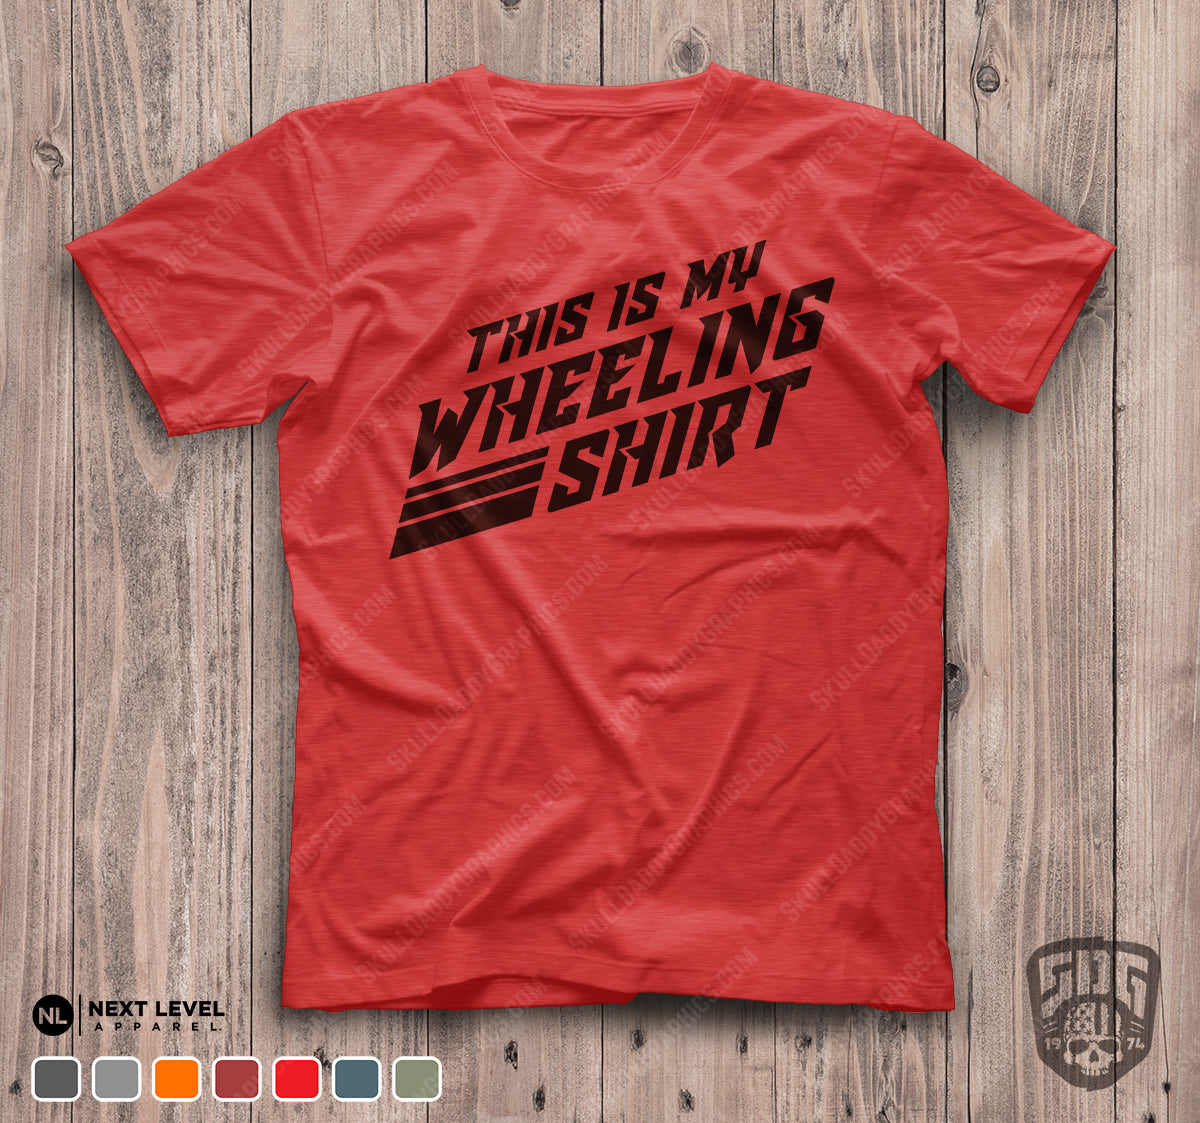 This is My Wheeling Shirt t-shirt